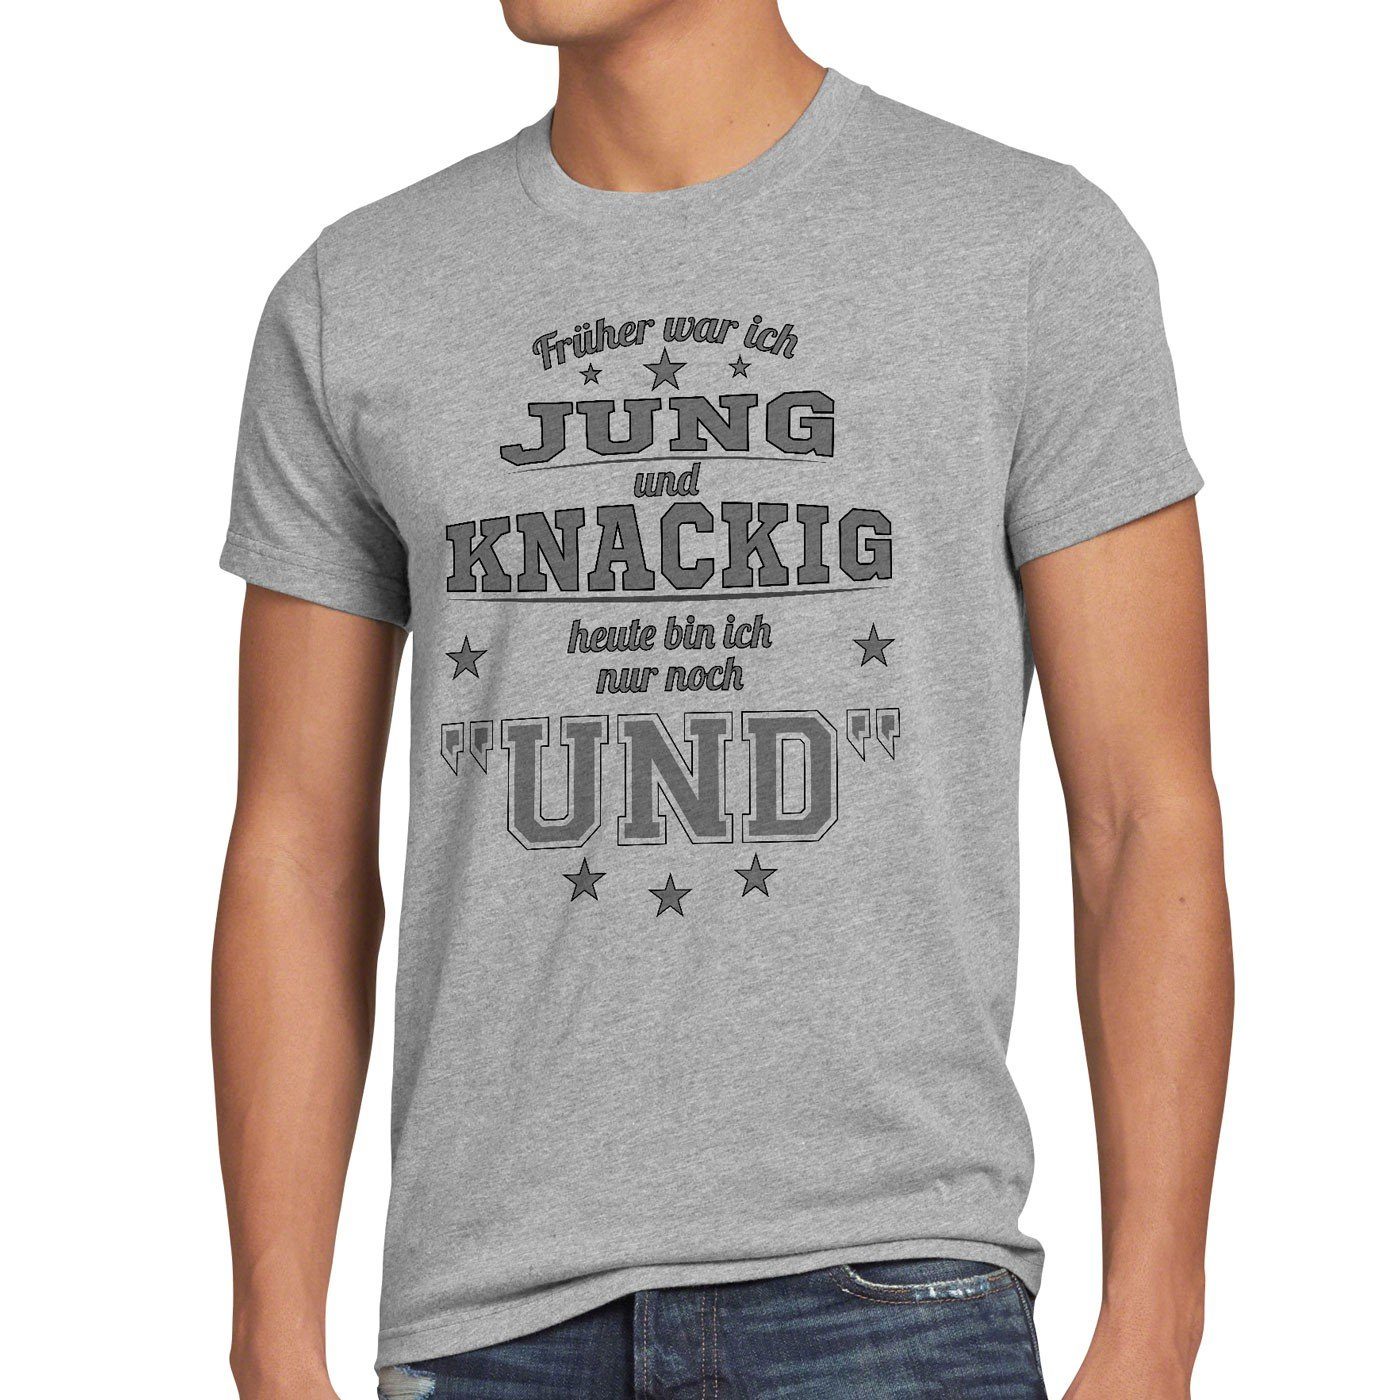 style3 Print-Shirt Herren T-Shirt Früher Funshirt Gag meliert Jung heute shirt Knackig grau und Fun nur Spruch